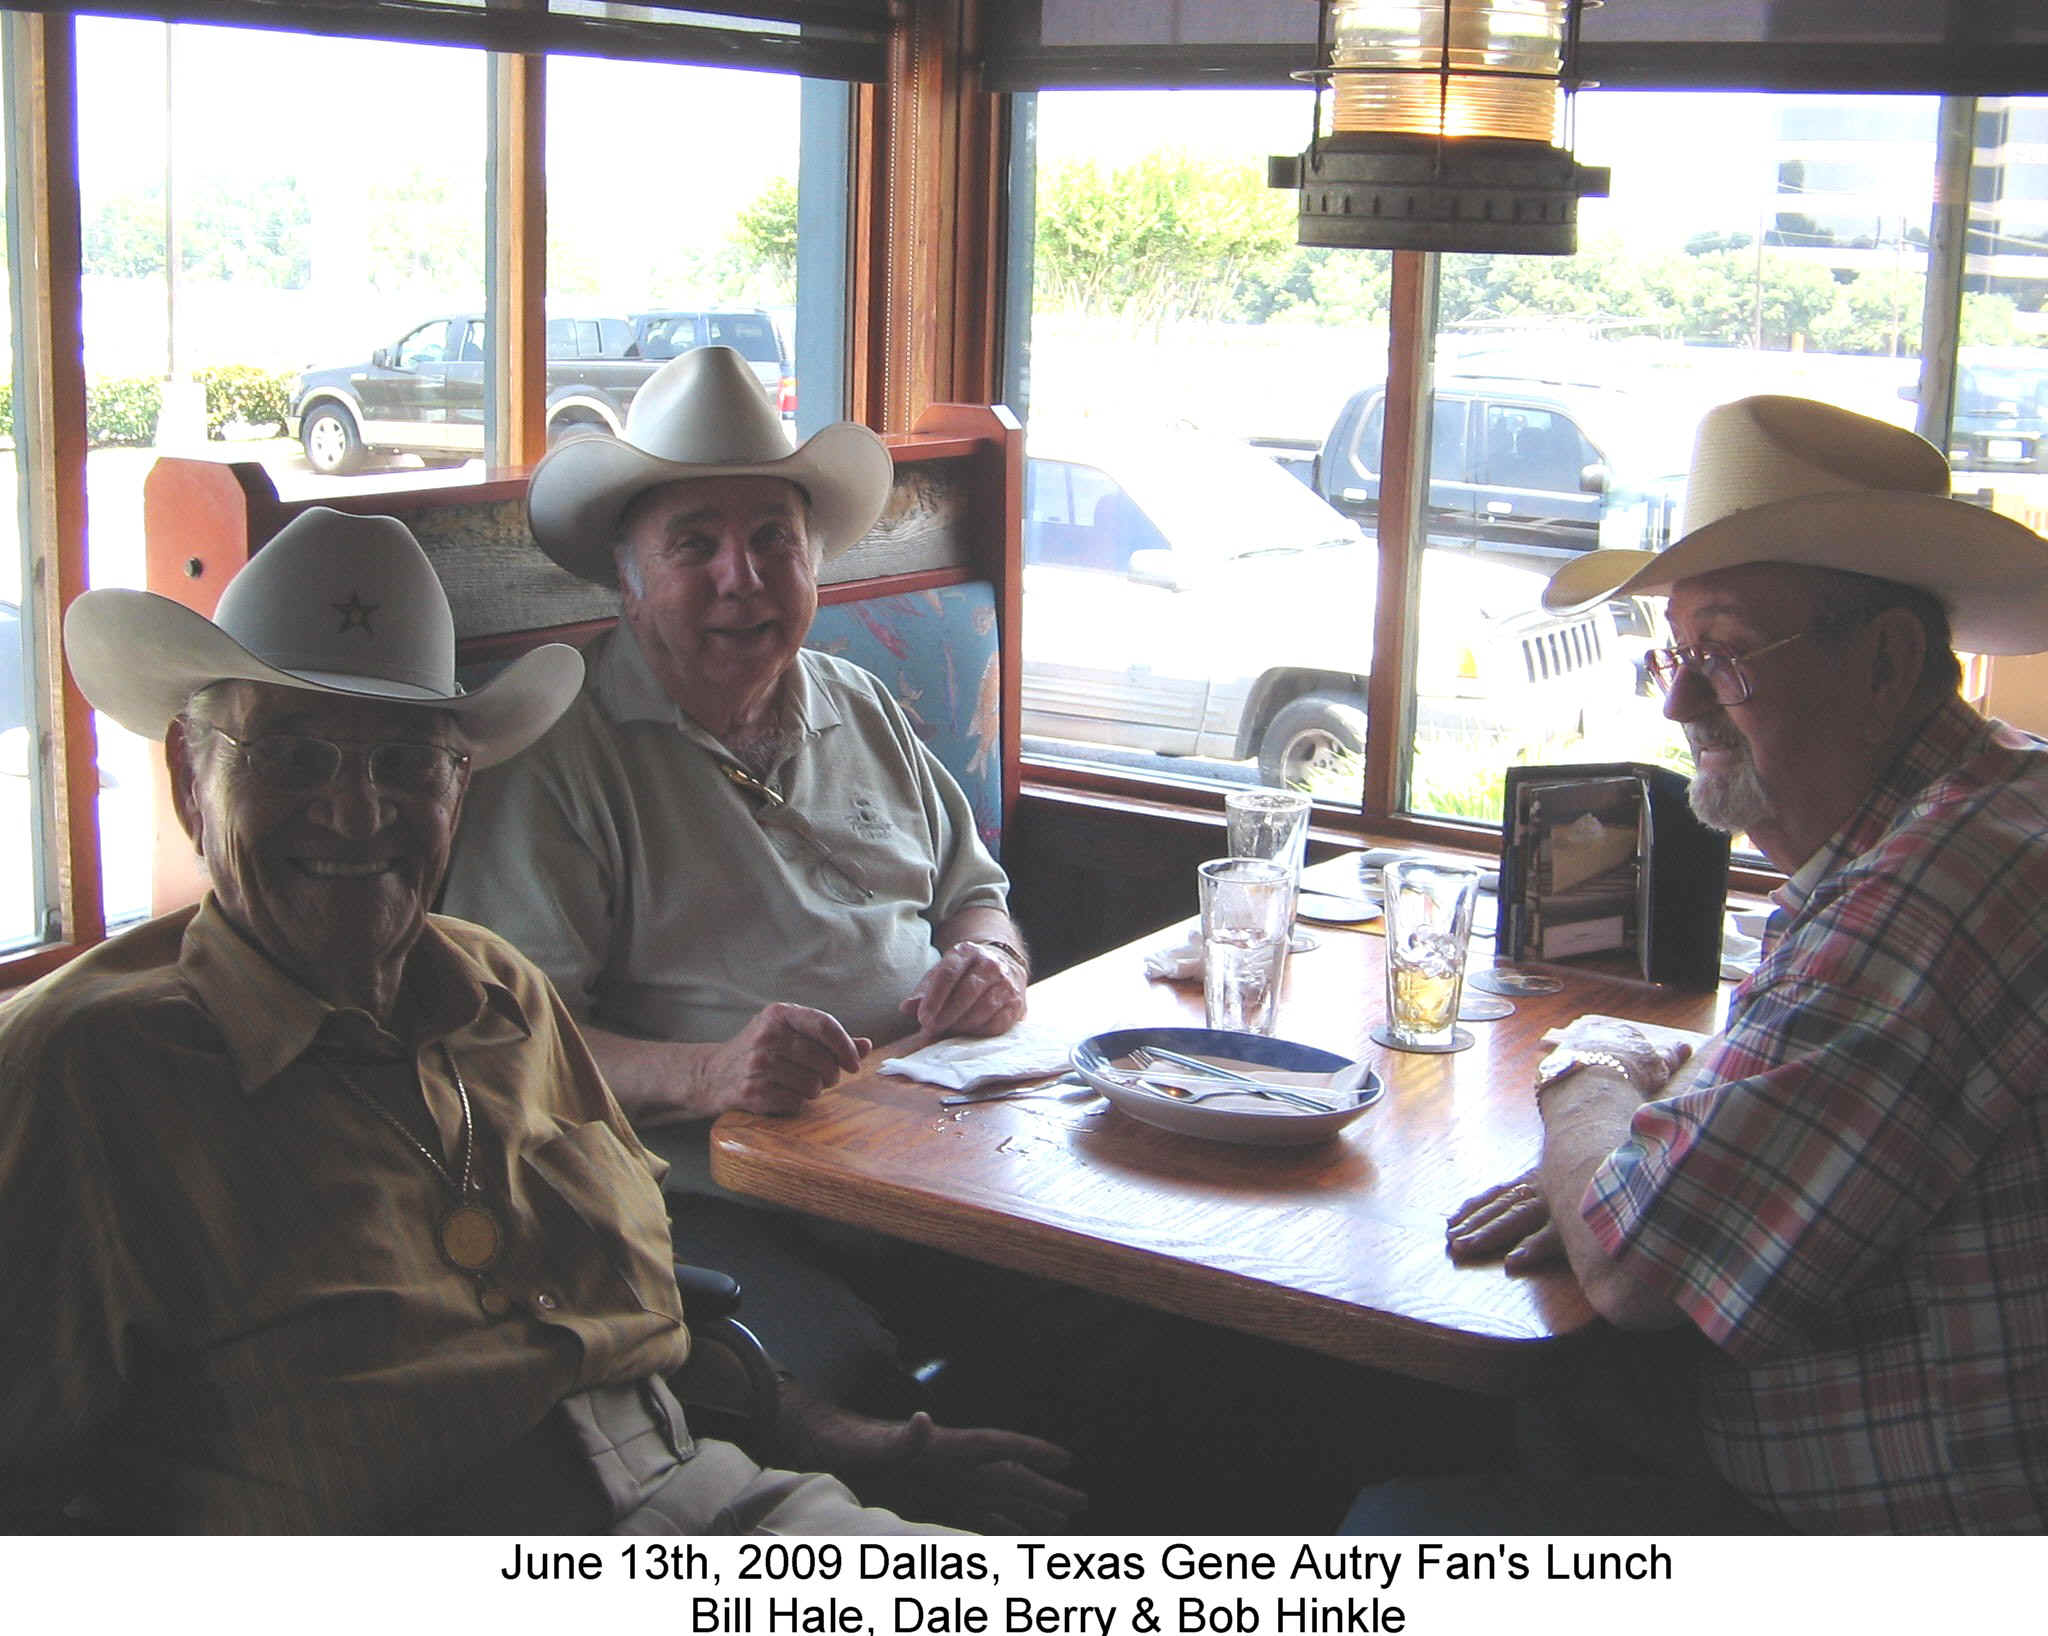 ** June 2009 Dallas, Texas Gene Autry Fans Lunch **